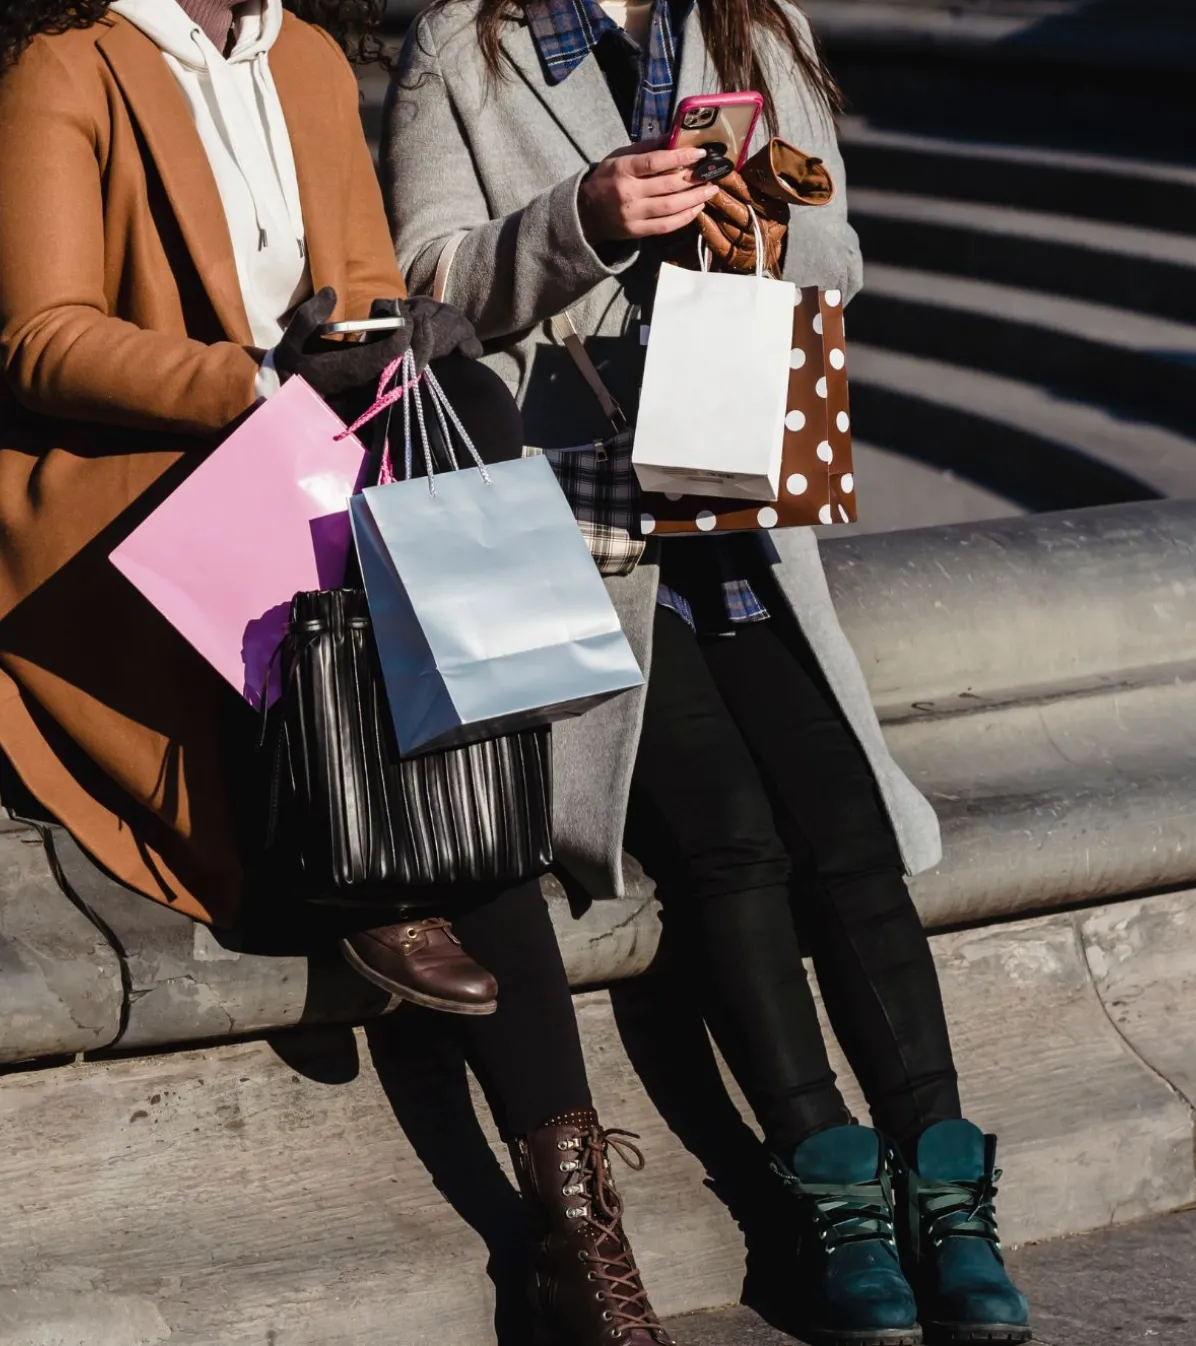 detail redirect checkout women giftbags phone shopping